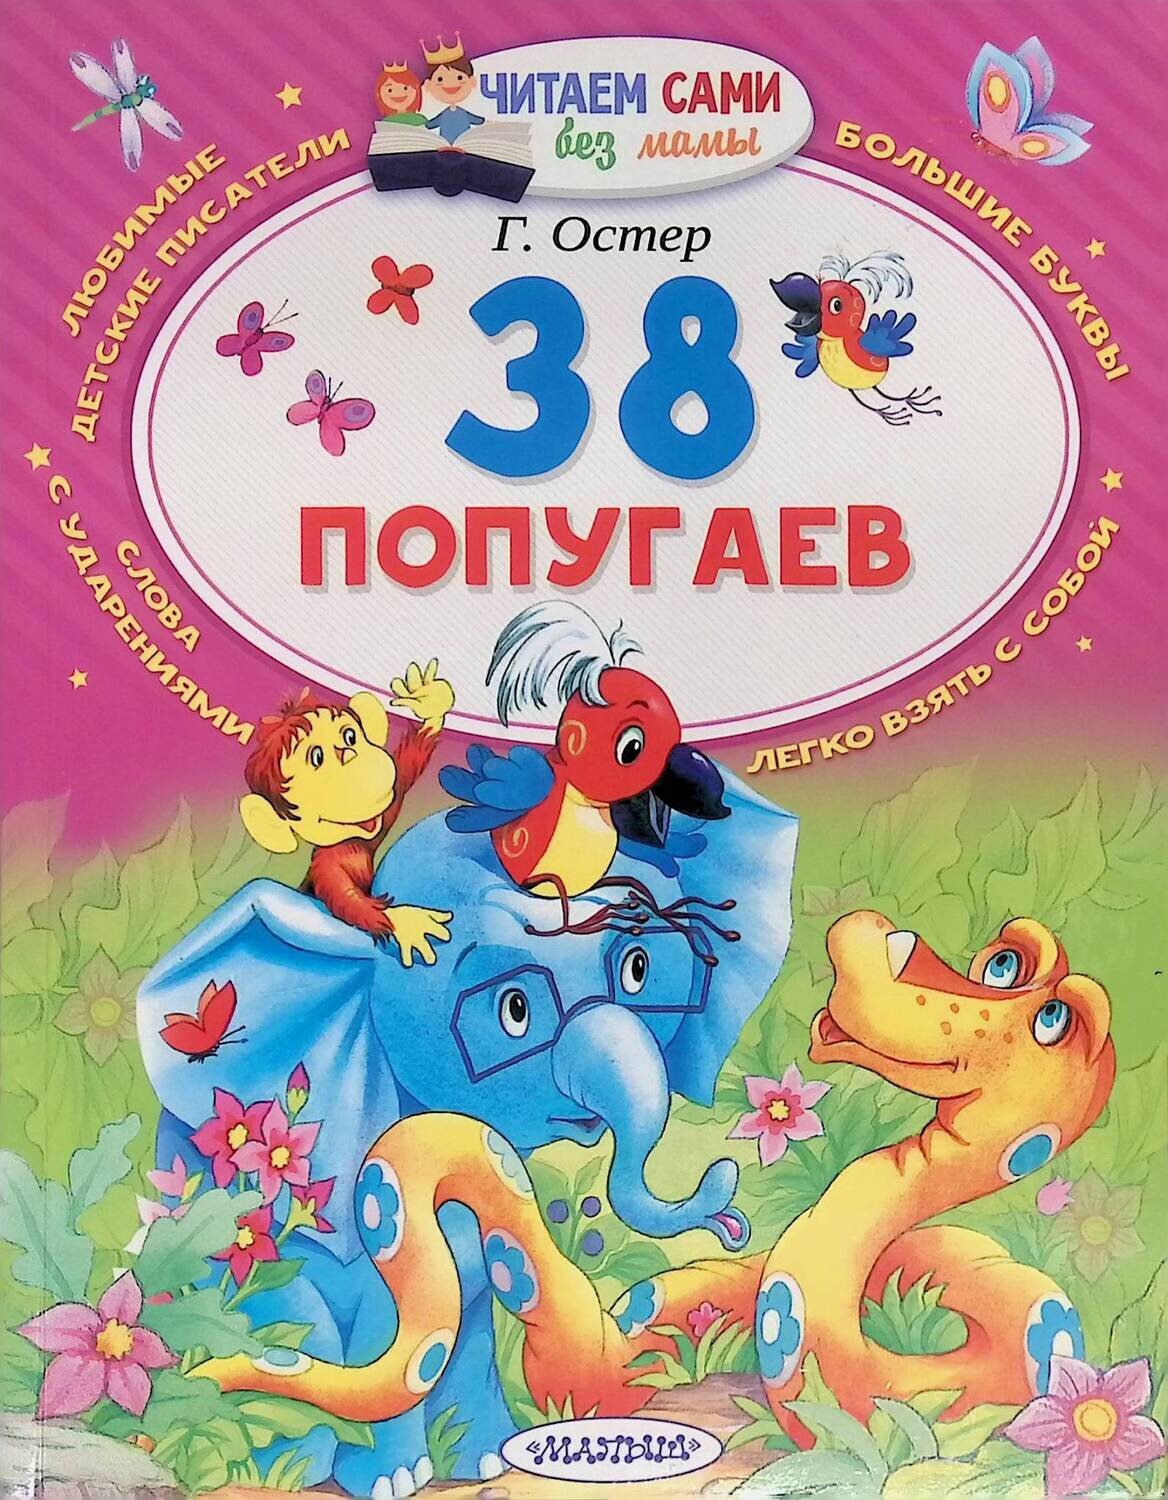 38 попугаев; Остер Григорий Бенционович